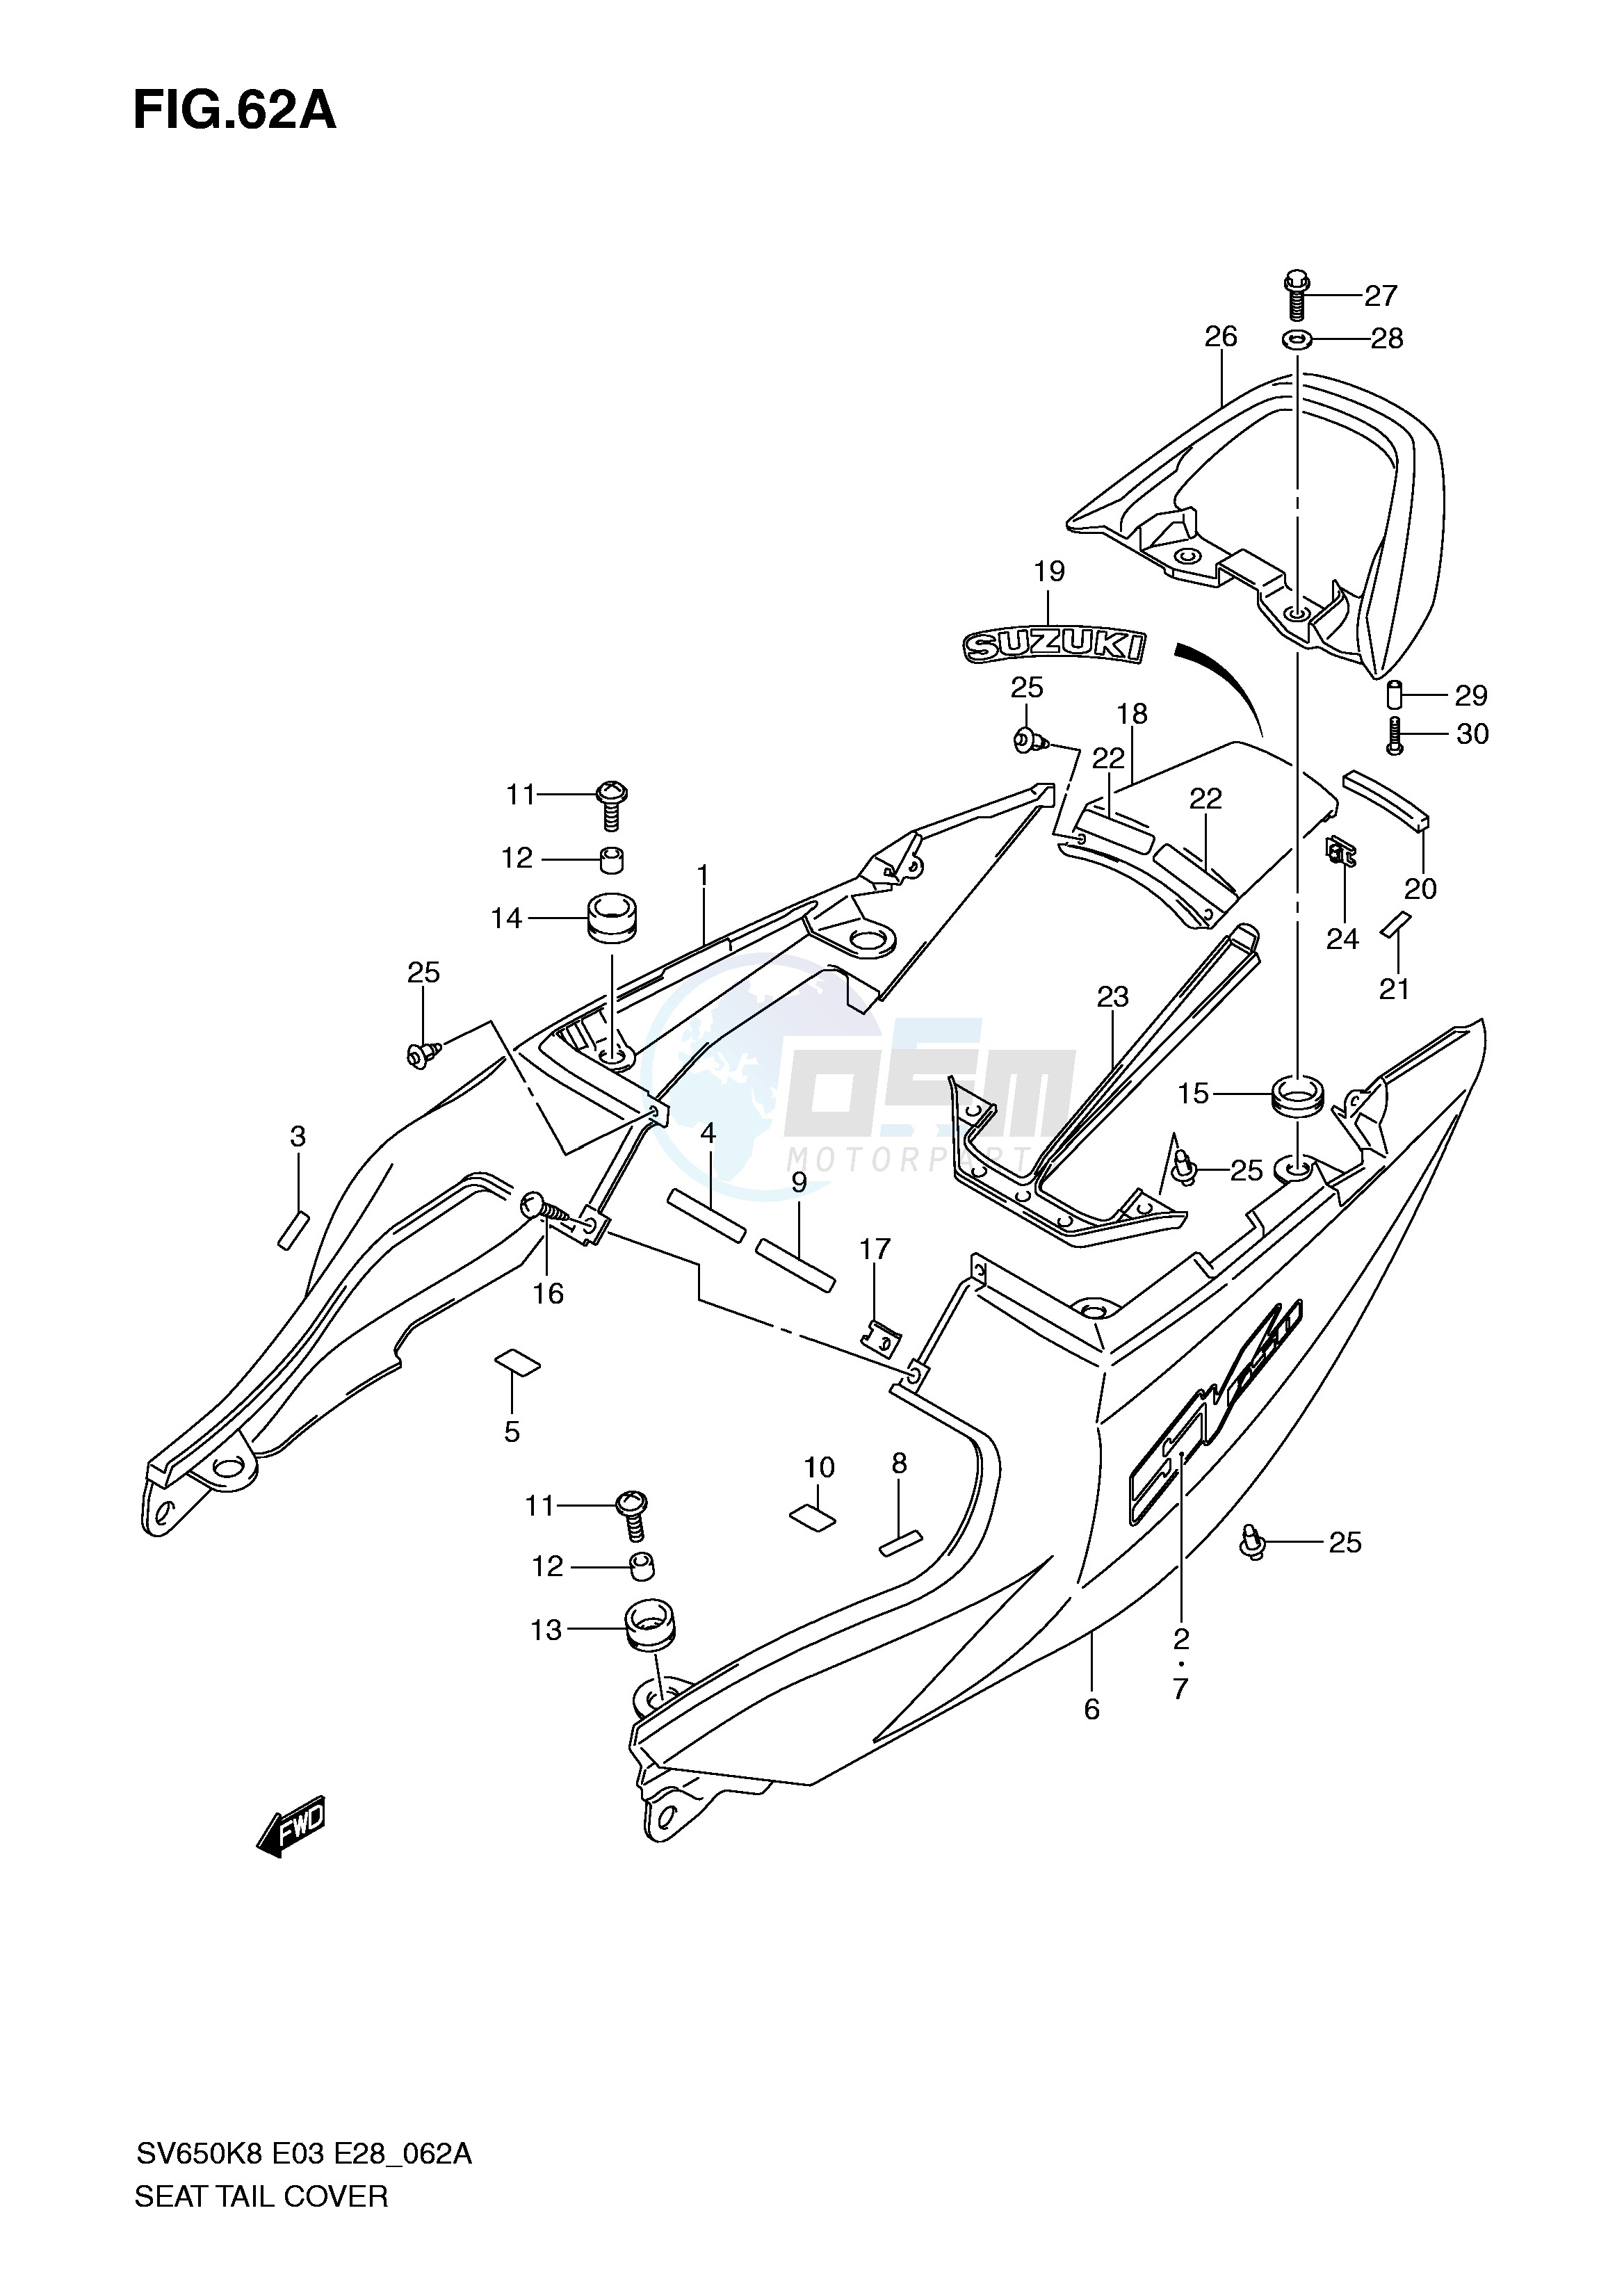 SEAT TAIL COVER (SV650K9 AK9) blueprint